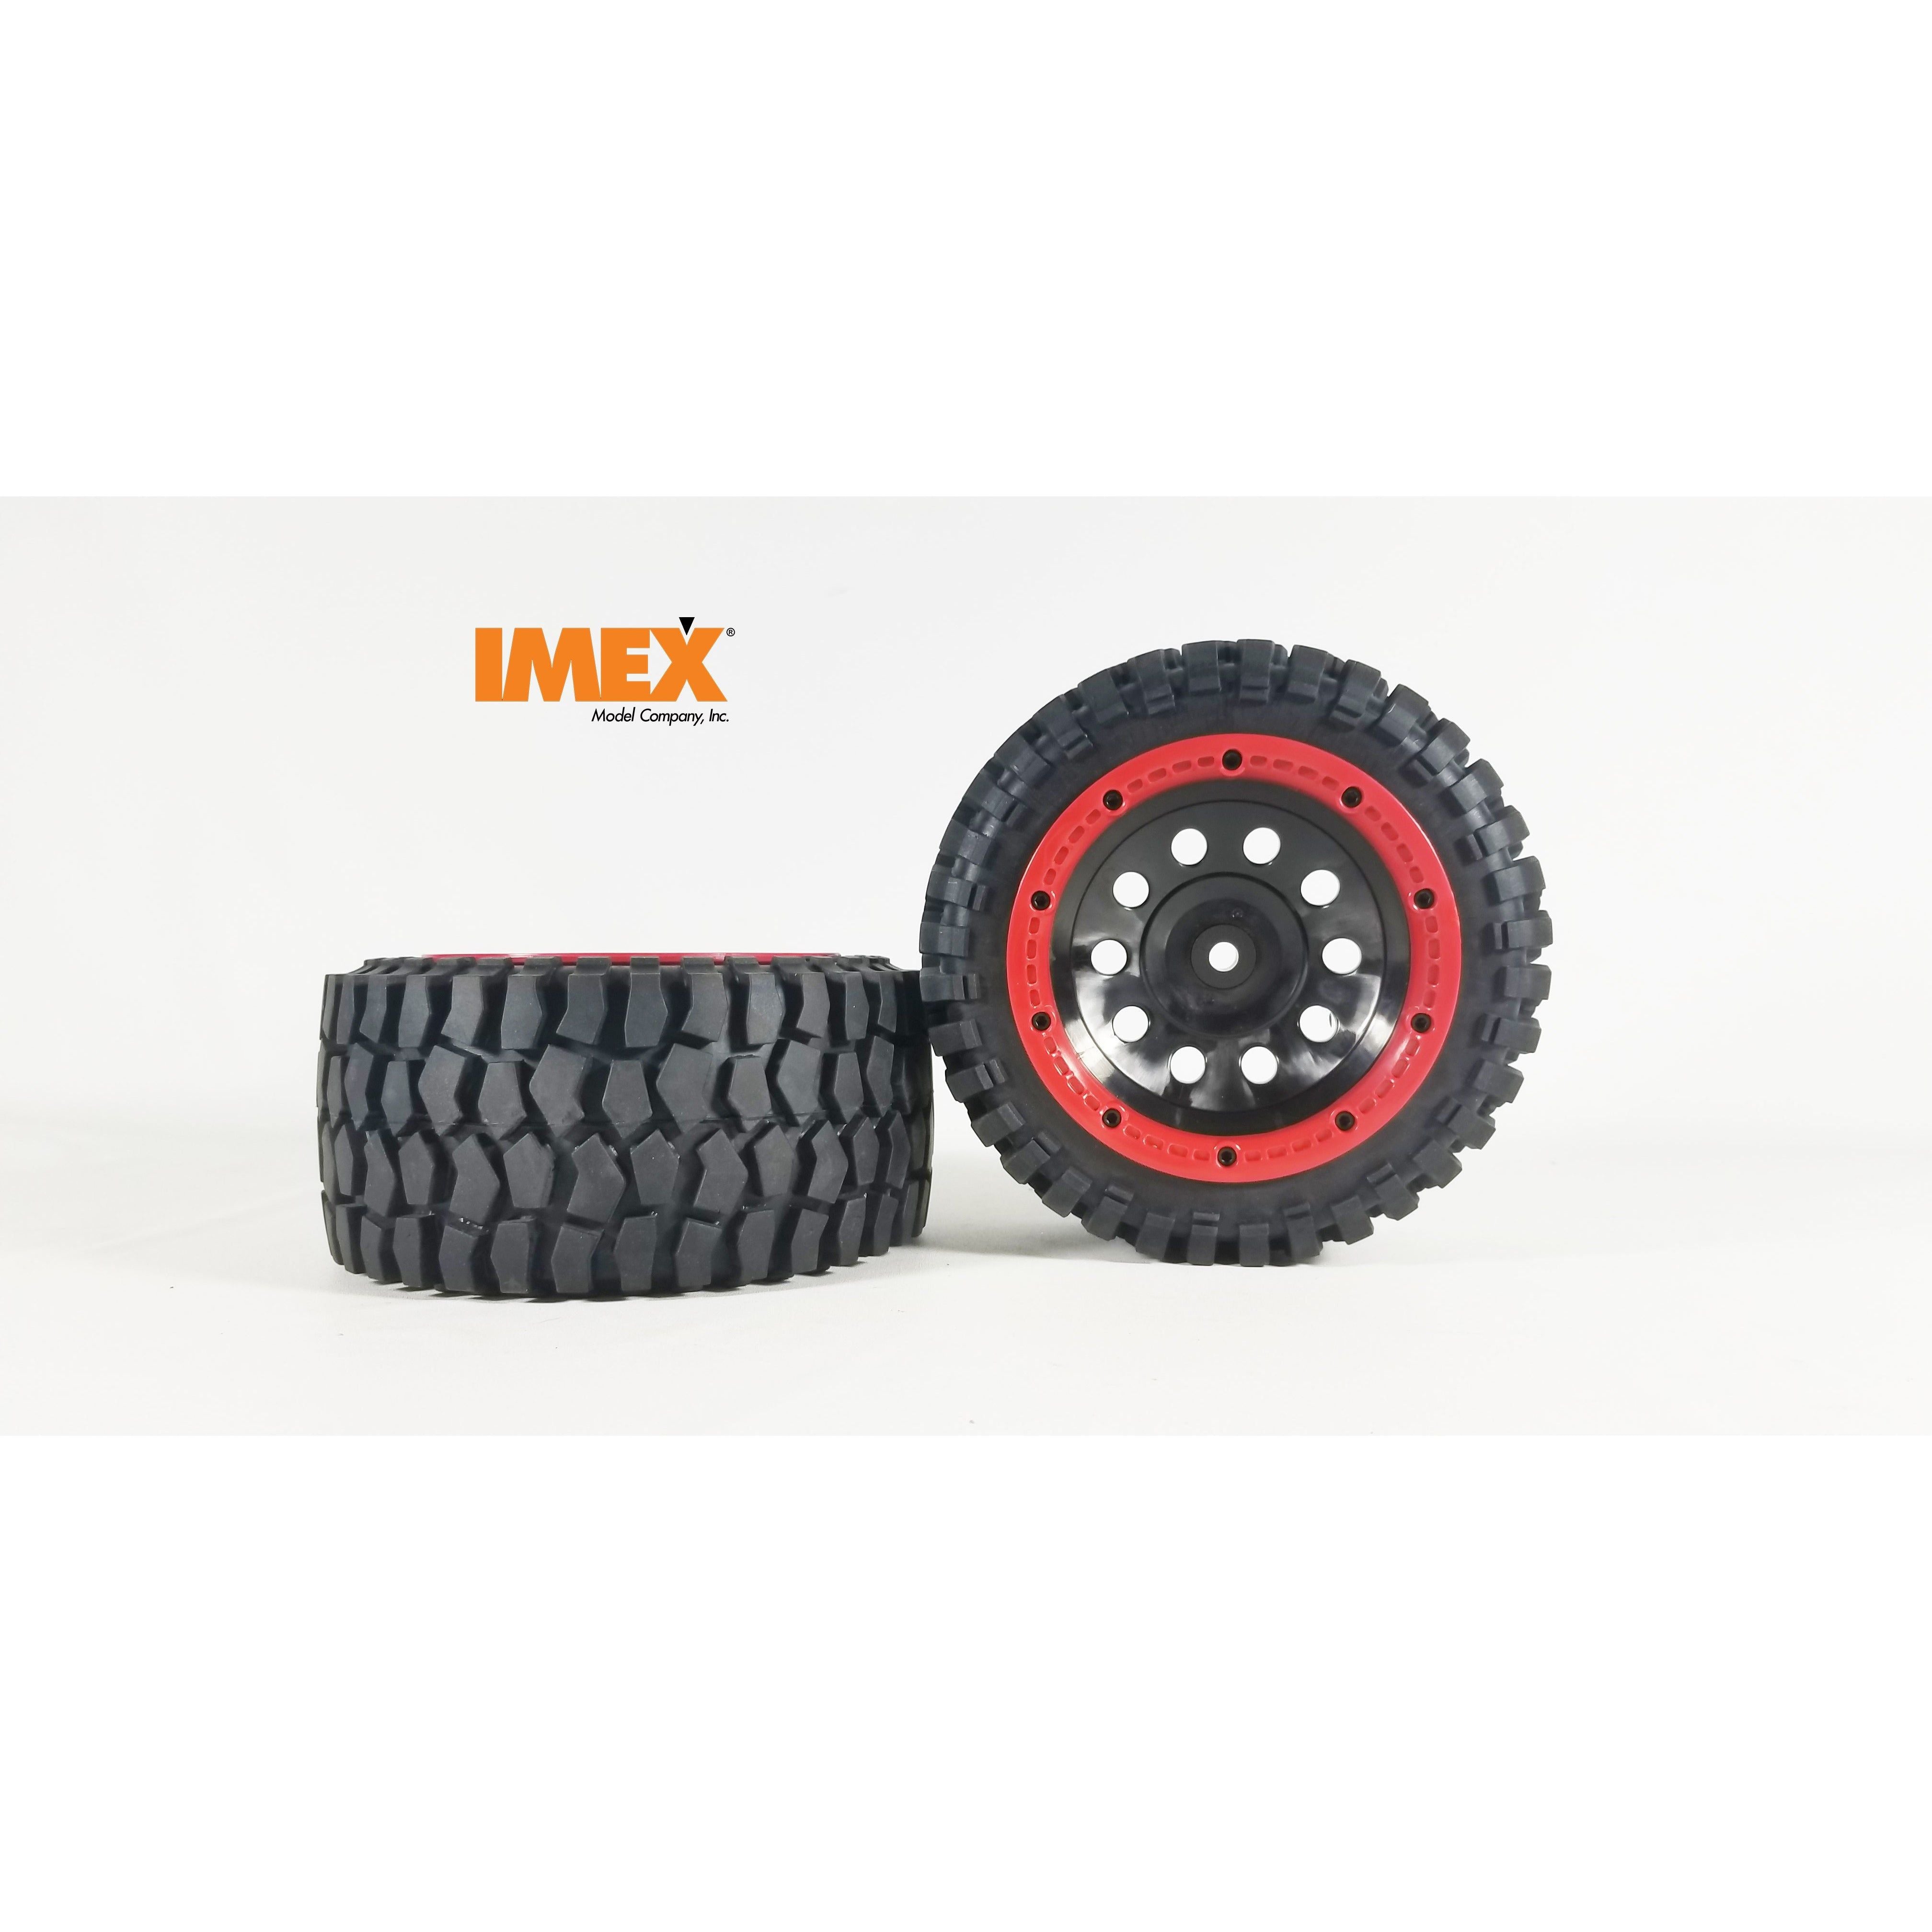 K-Rock Tires & Pluto Rims with Beadlocks - Rear (1 Pair) (Choose Color)